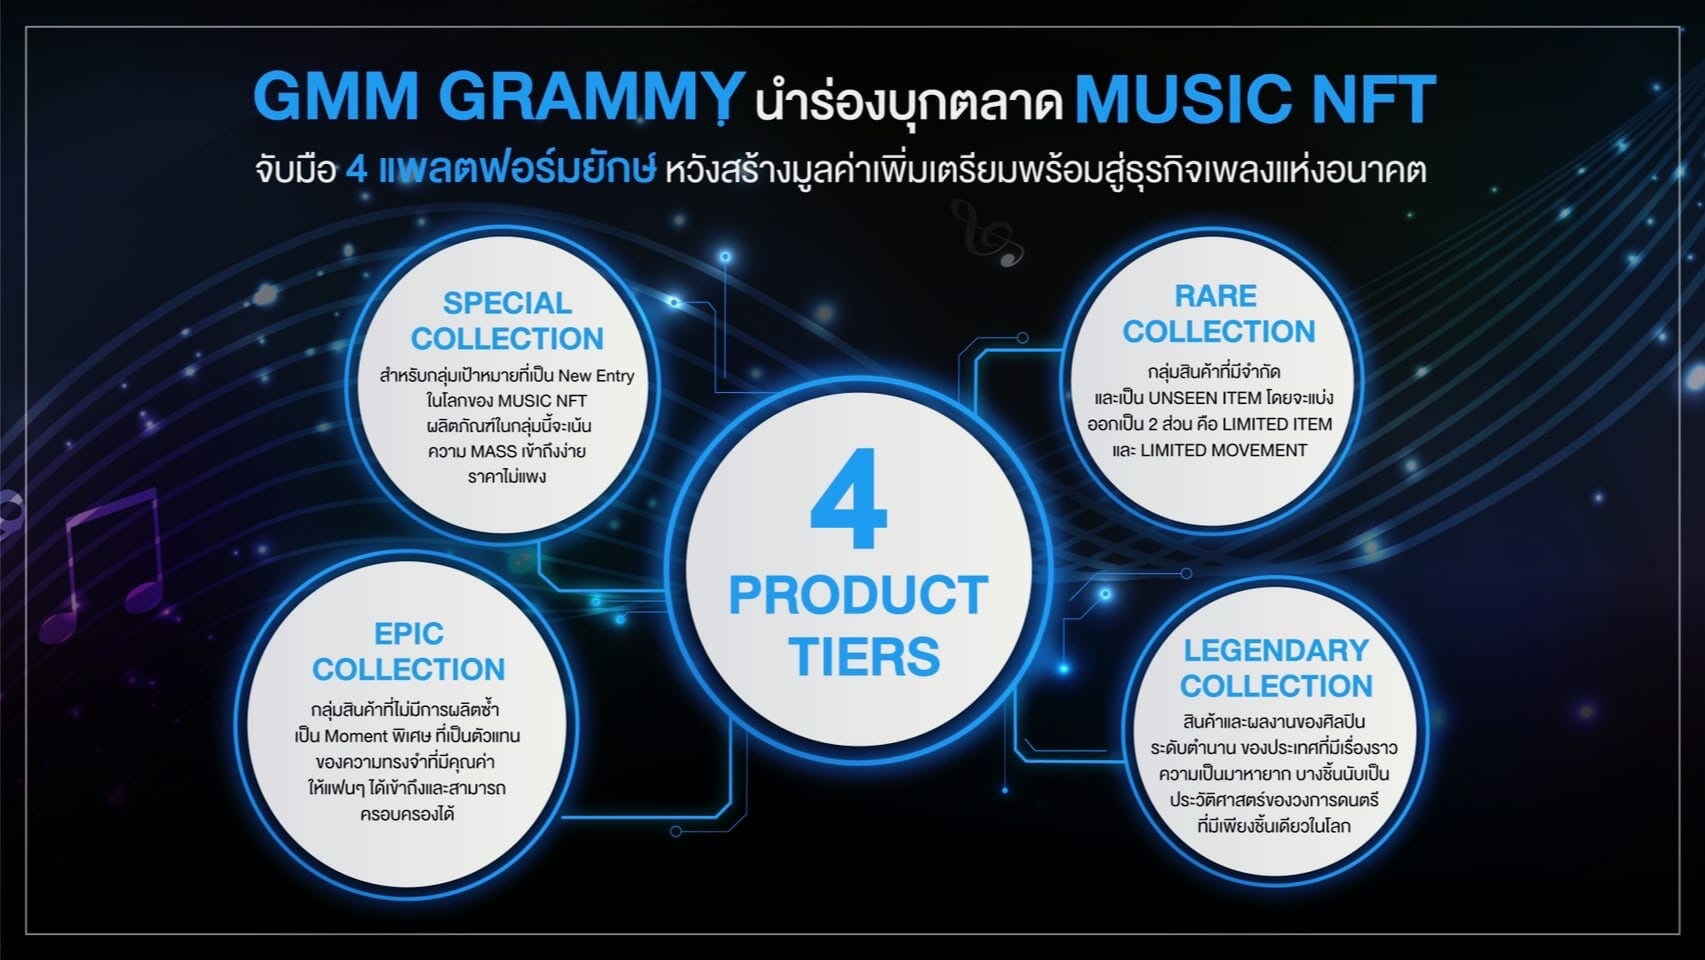 GMM Grammy นำร่องบุกตลาด MUSIC NFT จับมือ Bitkub, Coral, East NFT และ Zipmex 5